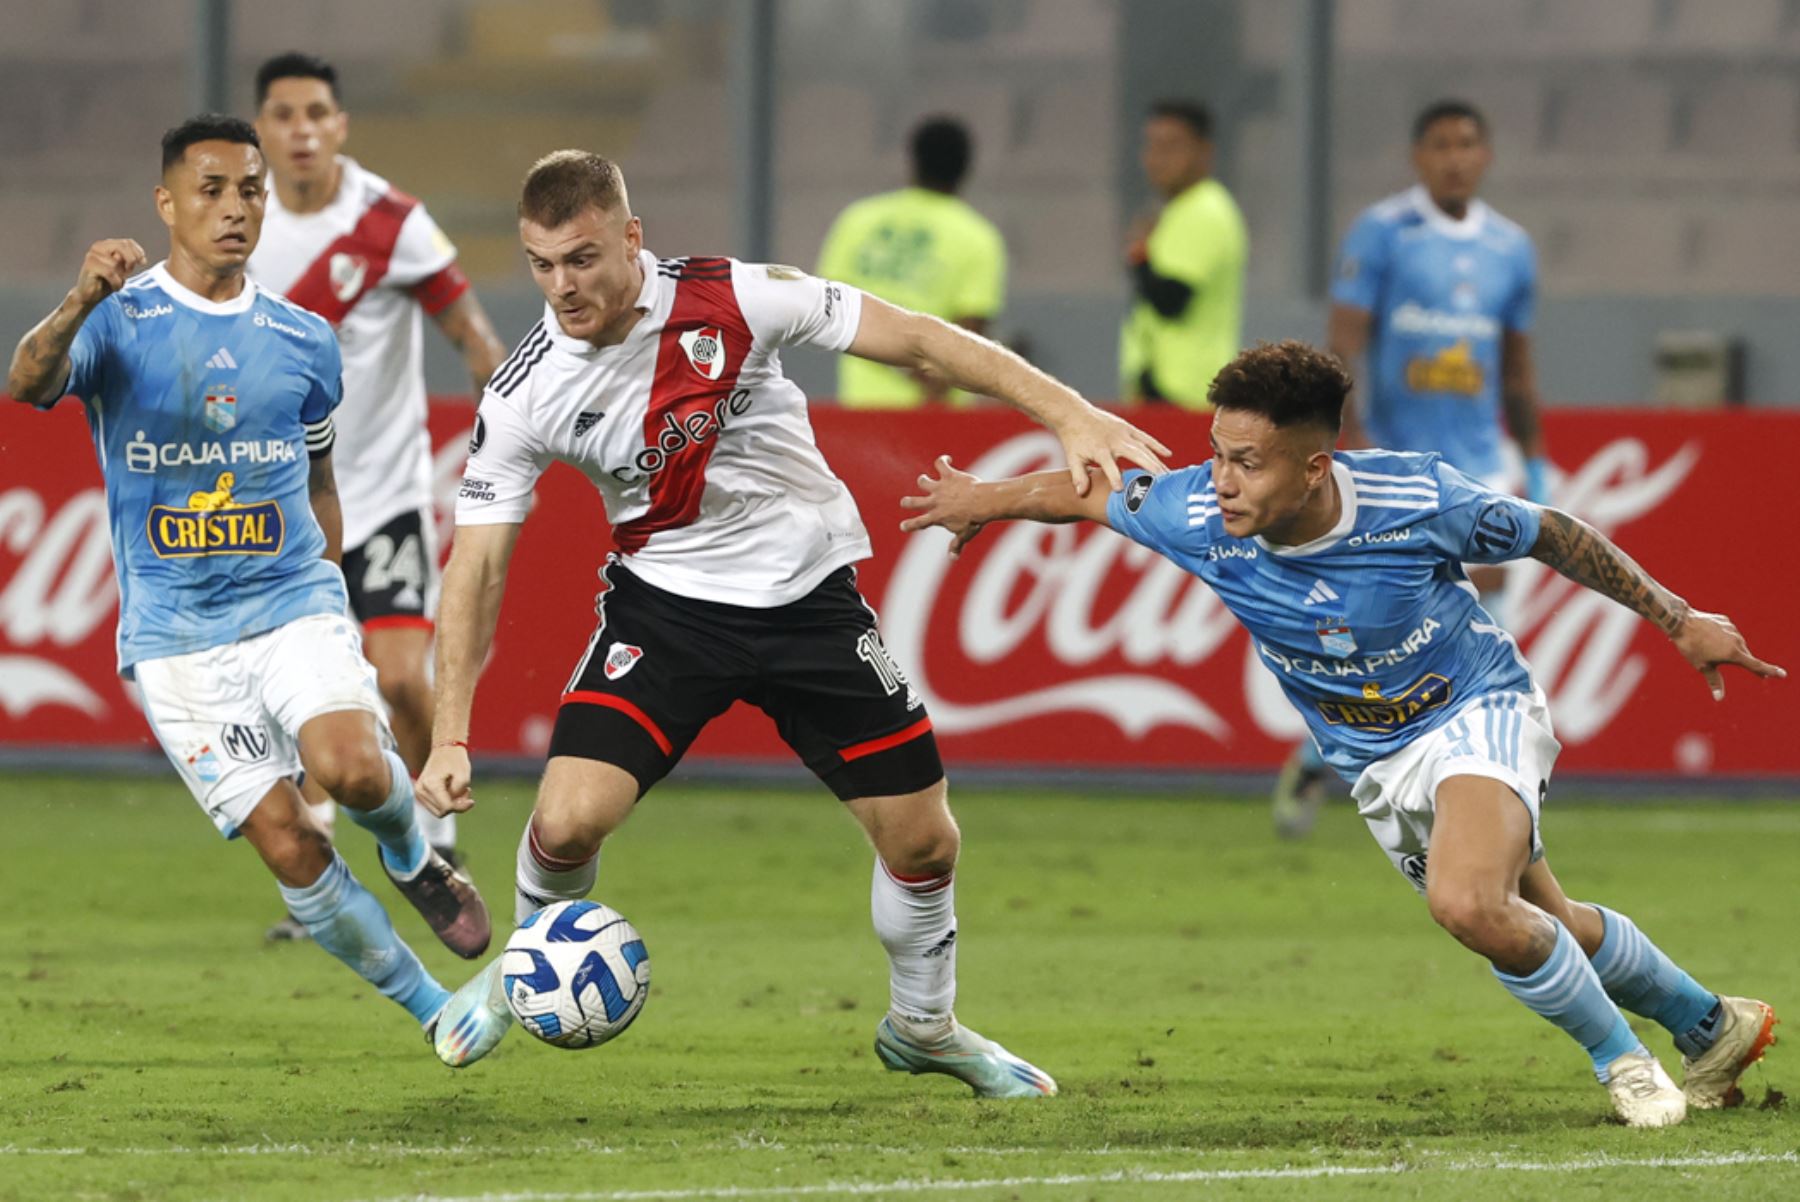 Sporting Cristal de Perú y River Plate de Argentina se enfrentan en el Estadio Nacional de Lima por la Copa Libertadores.

Foto: ANDINA/Vidal Tarqui